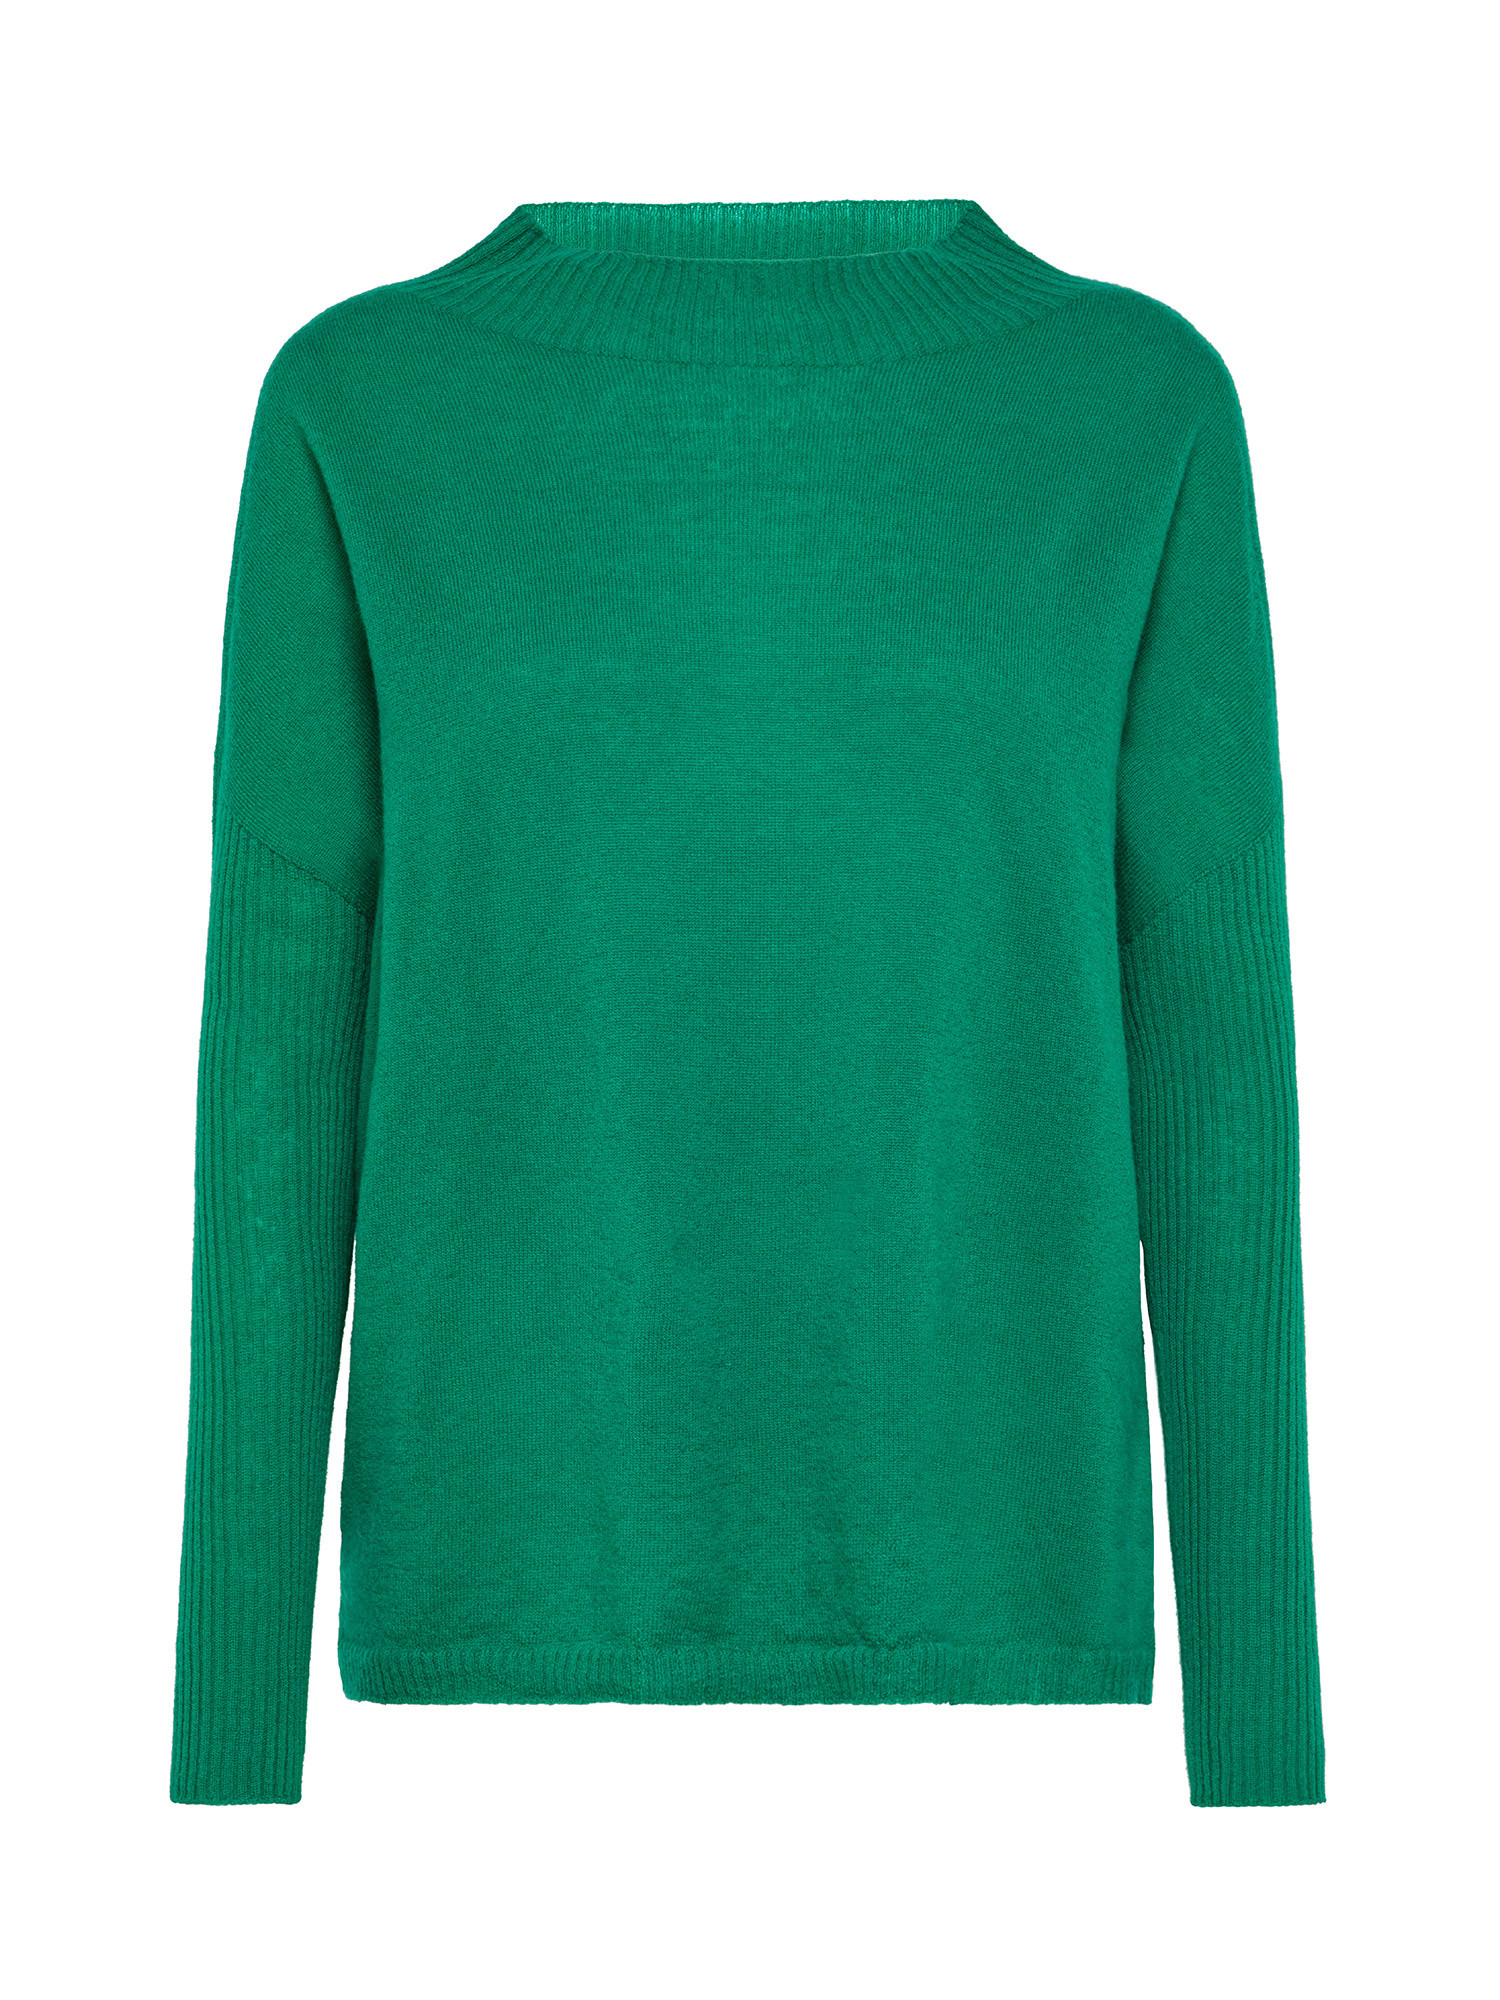 K Collection - Turtleneck sweater, Green, large image number 0